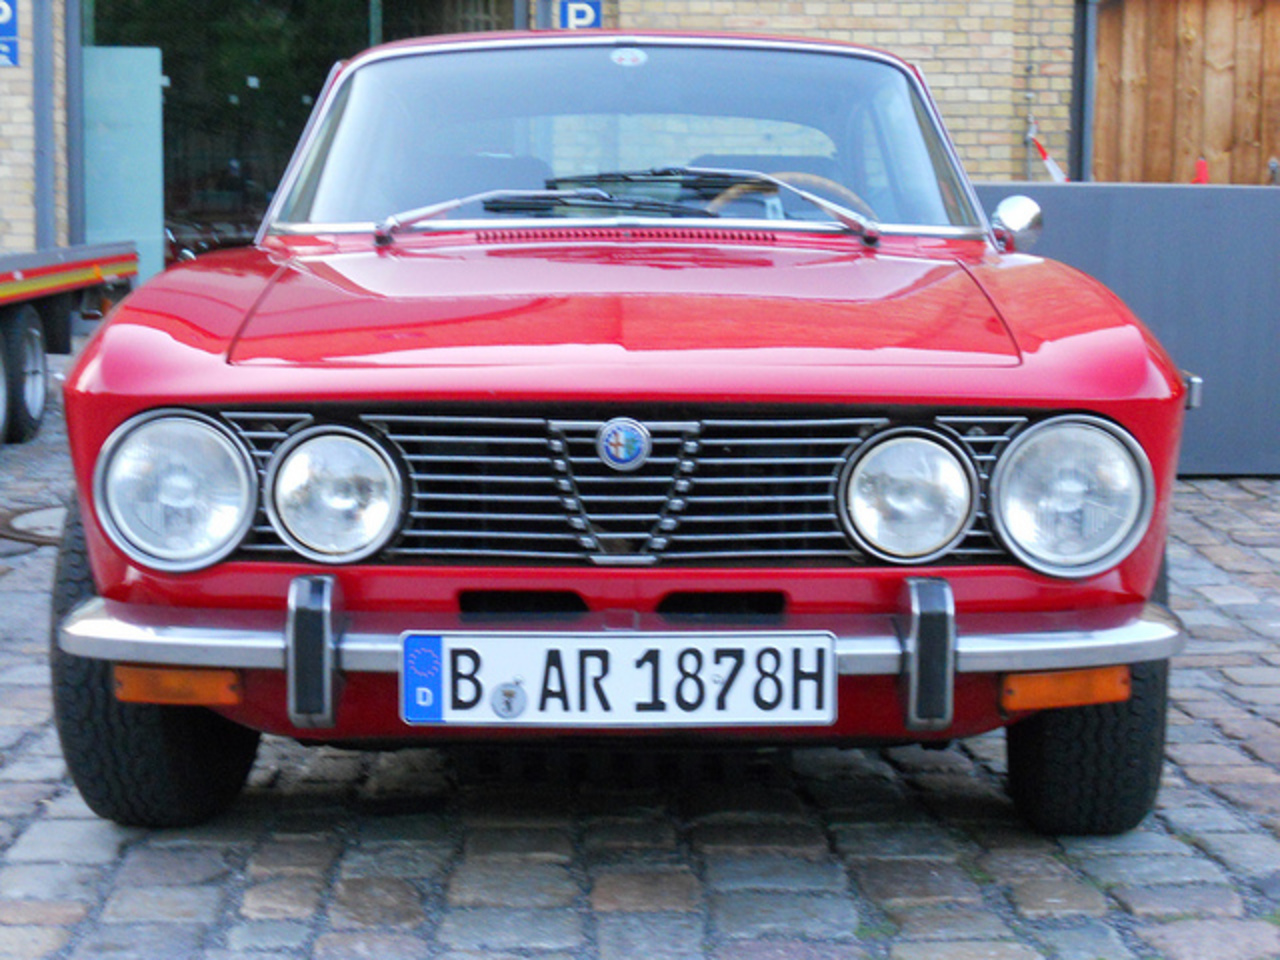 Alfa Romeo GTV 2000 Iniezione (1975) | Flickr - Photo Sharing!